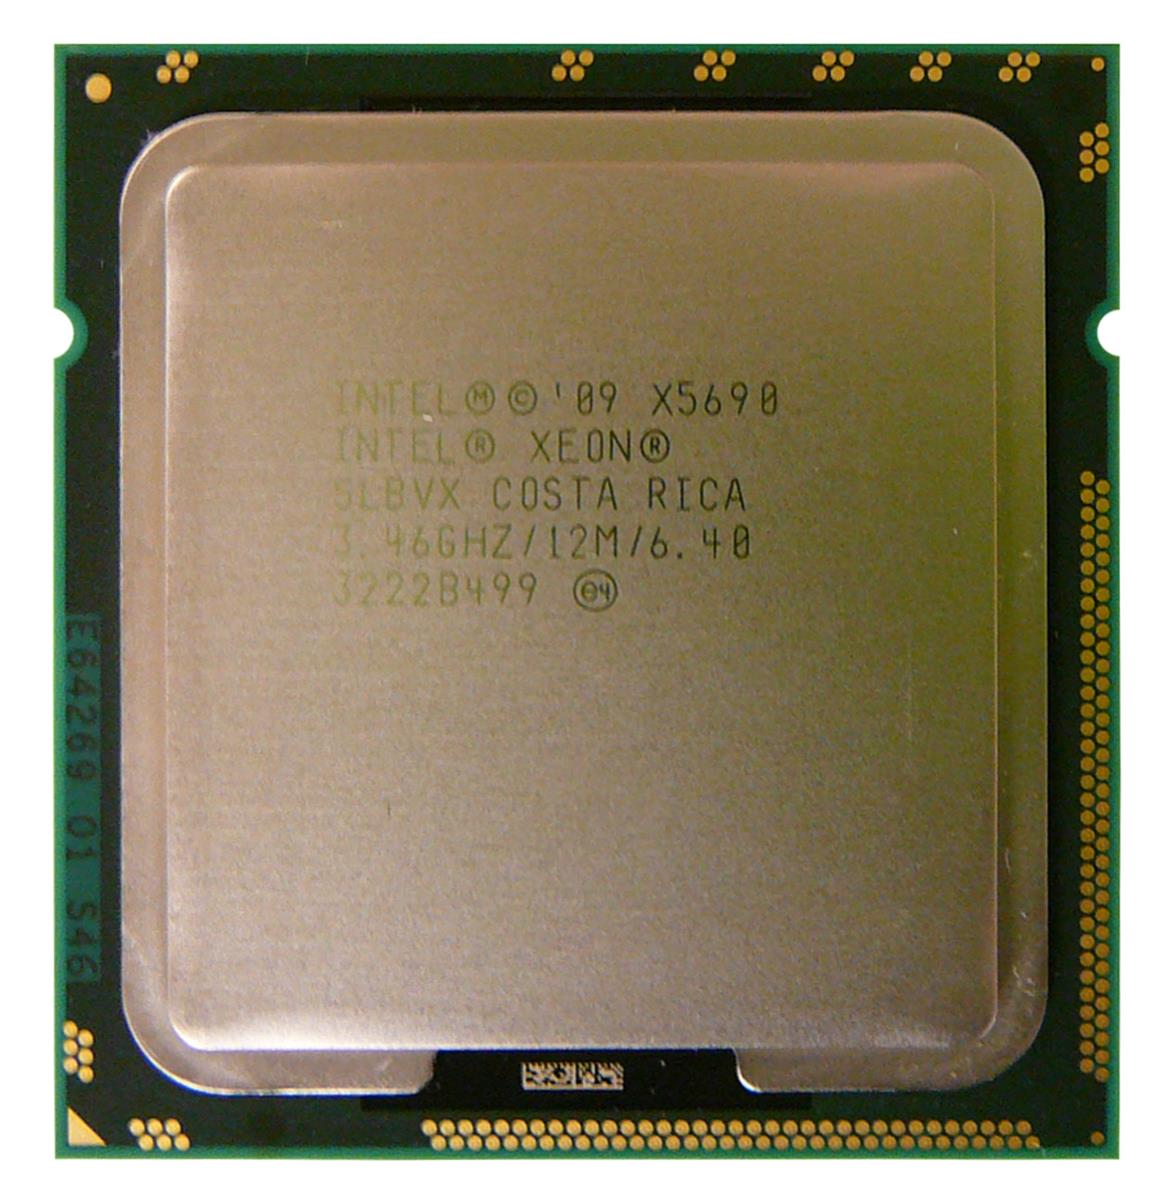 641154-L21 HP 3.46GHz 6.40GT/s QPI 12MB L3 Cache Intel Xeon X5690 6 Core Processor Upgrade for ProLiant DL360 G7 Server